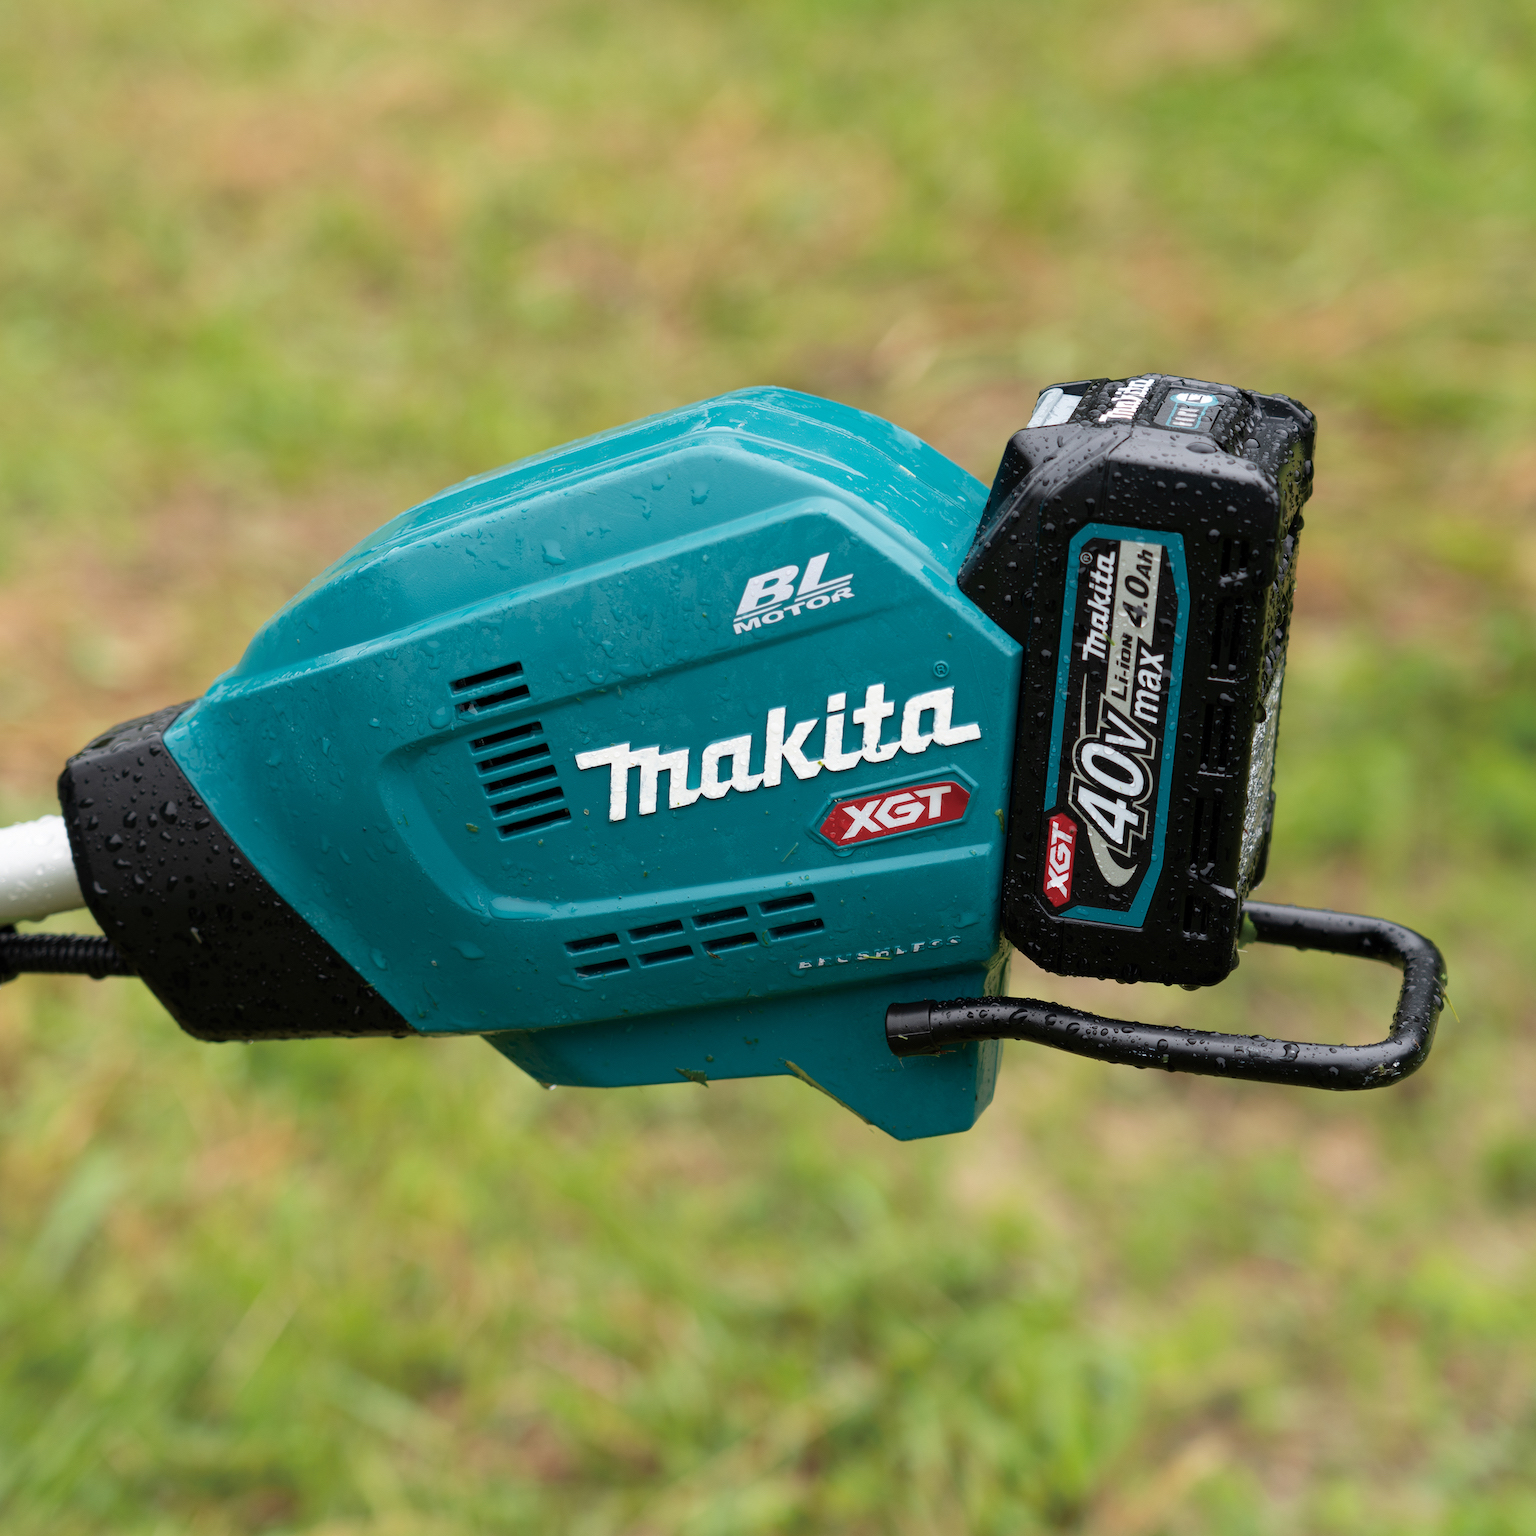 Makita expands its range of outdoor power equipment